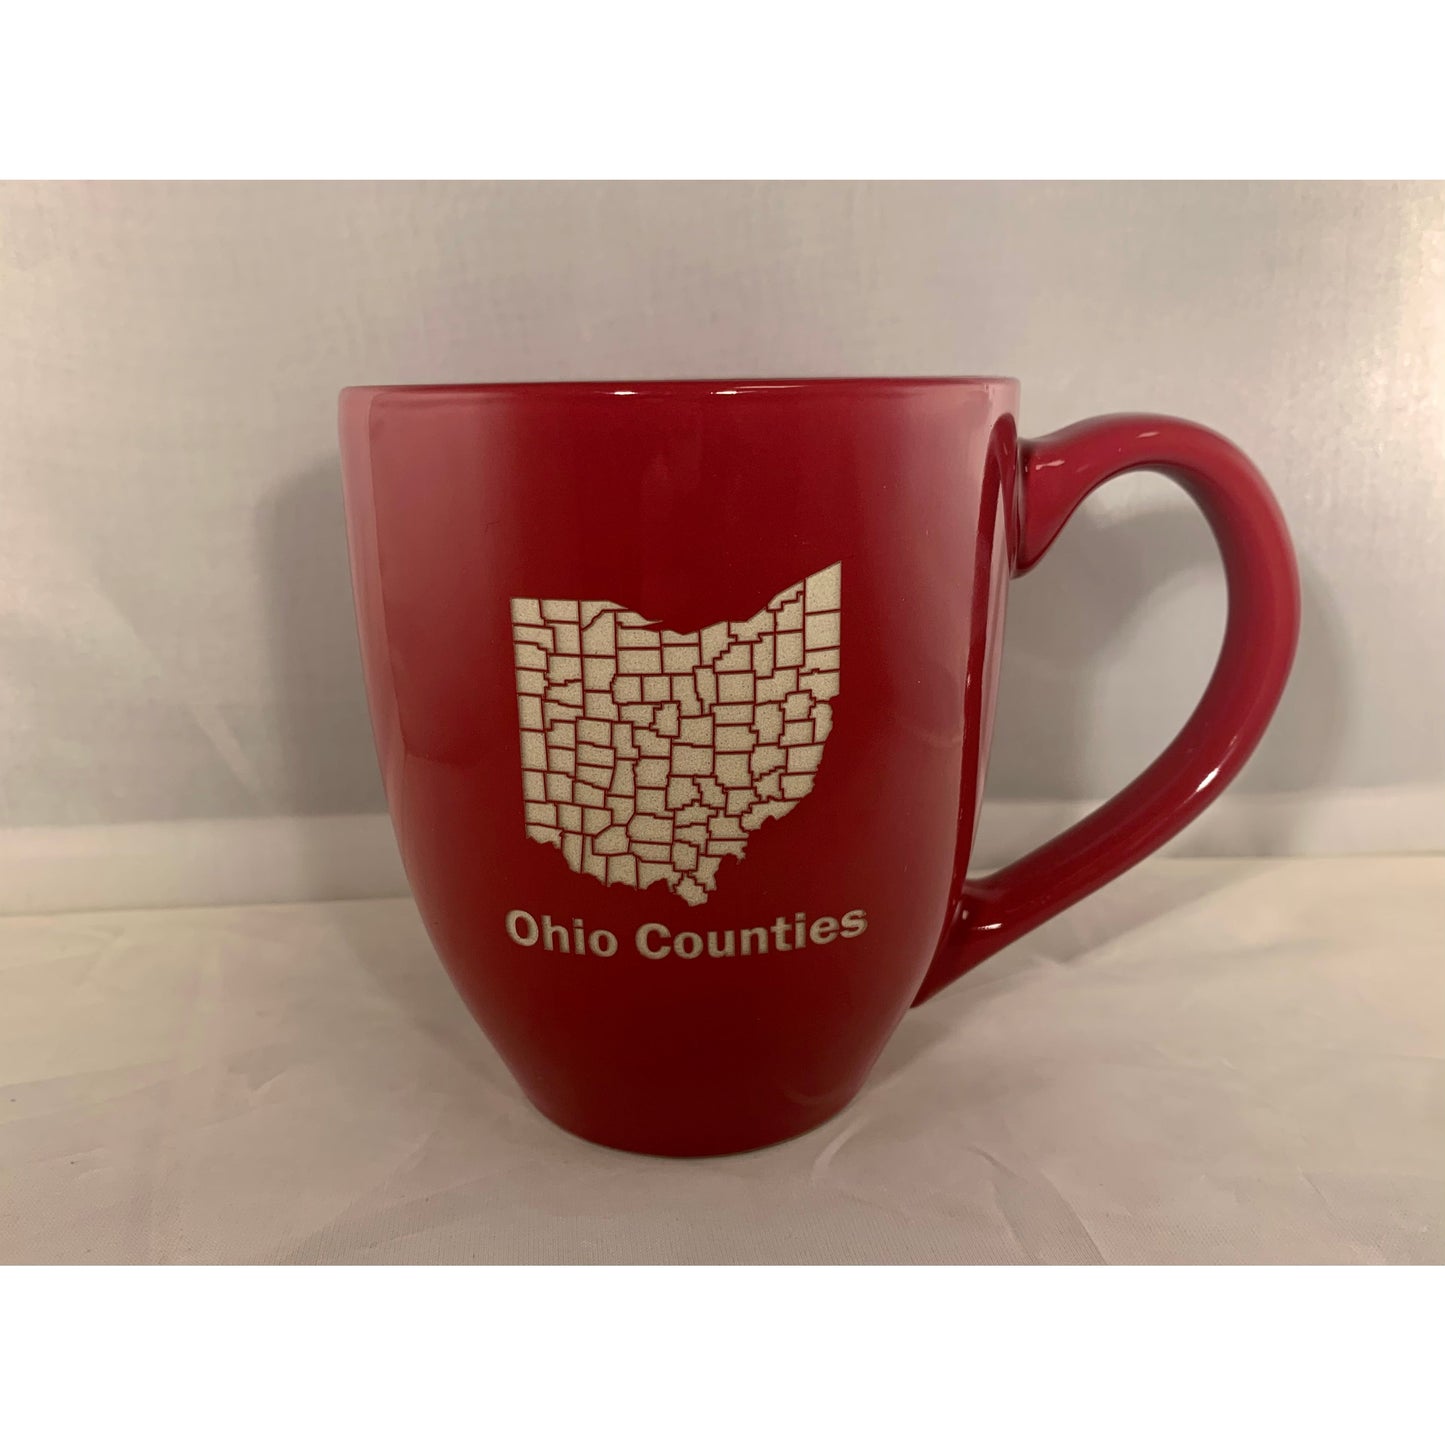 Ohio Counties Mug